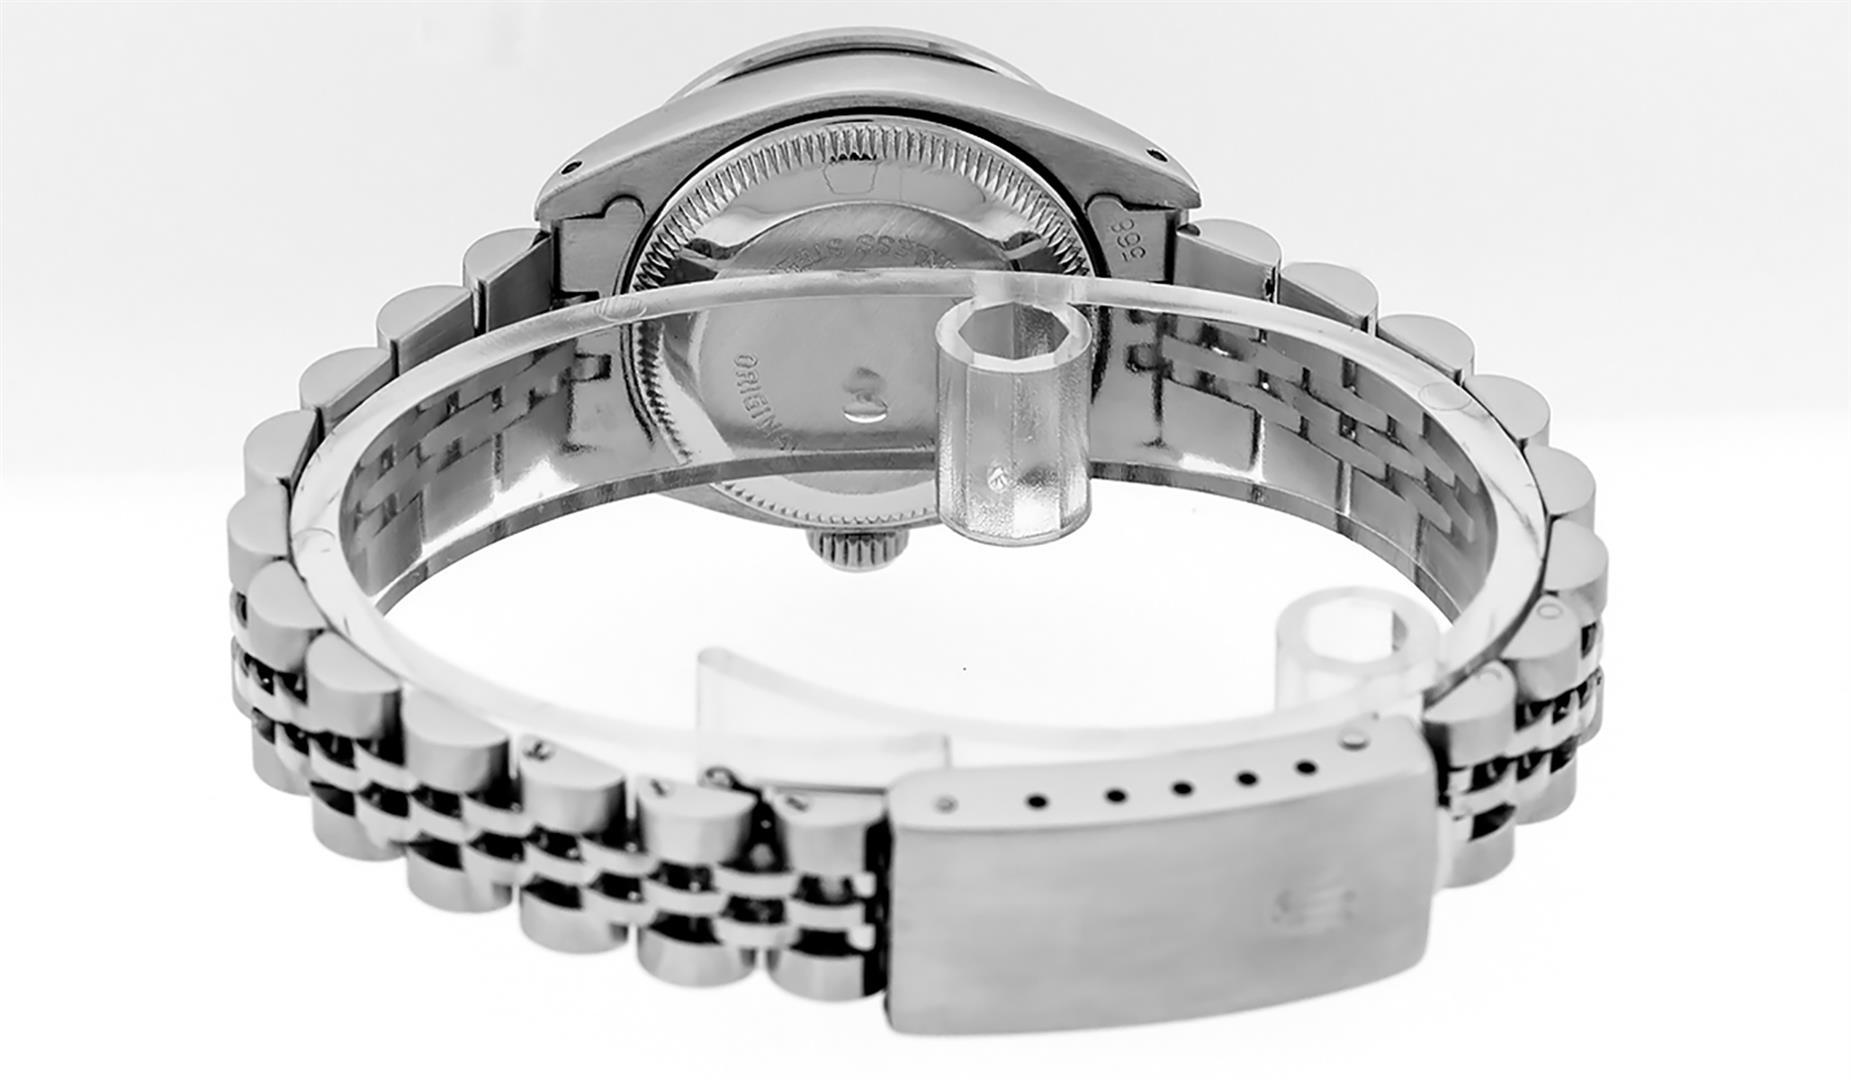 Rolex Ladies Stainless Steel Black Diamond And Sapphire Wristwatch